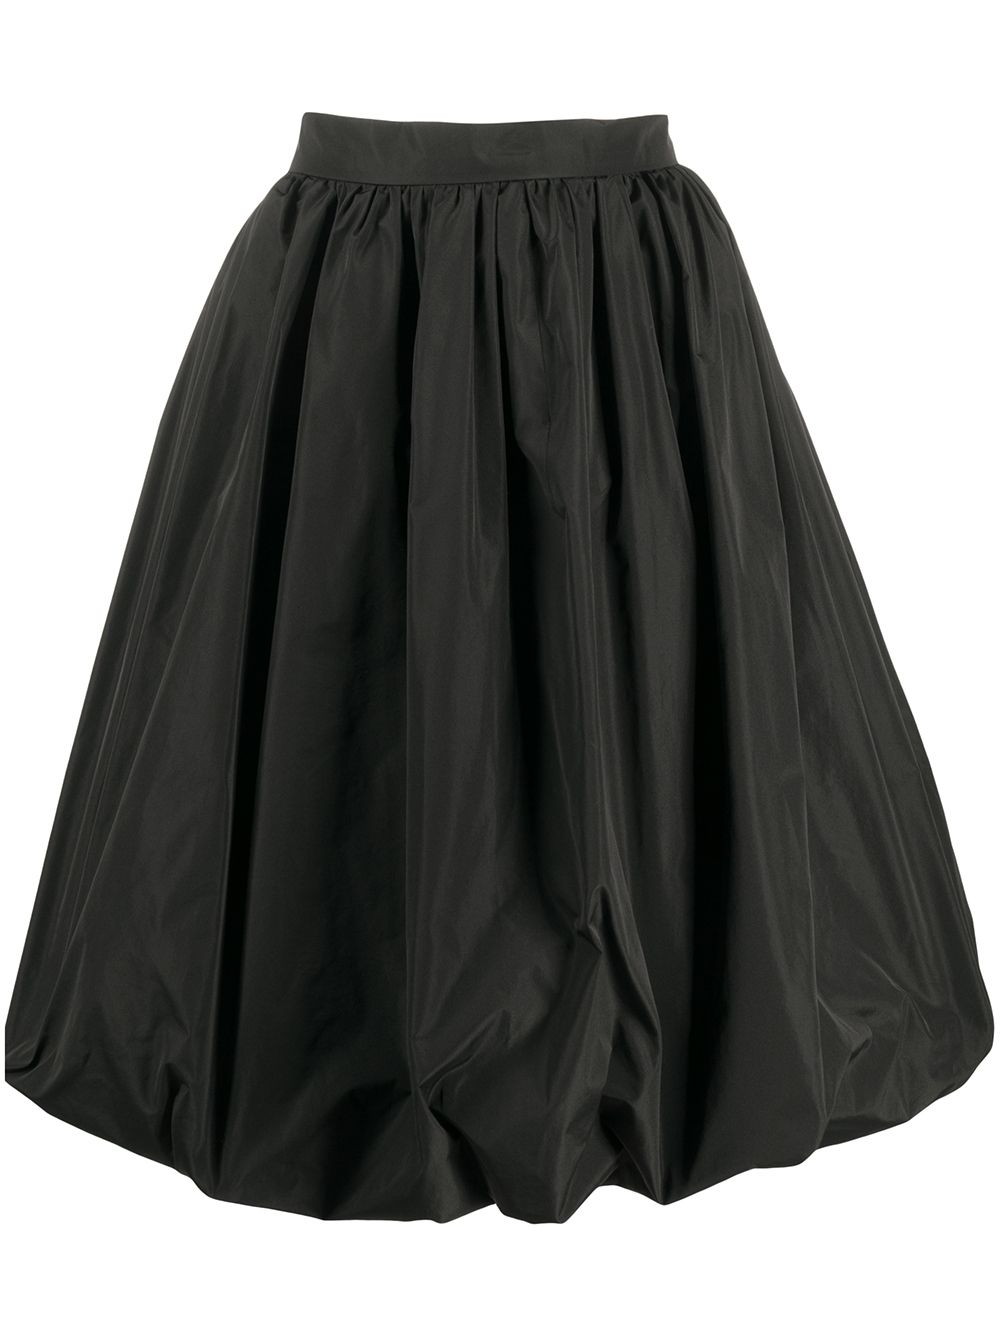 Image 1 of Patou Generous bubble-silhouette skirt